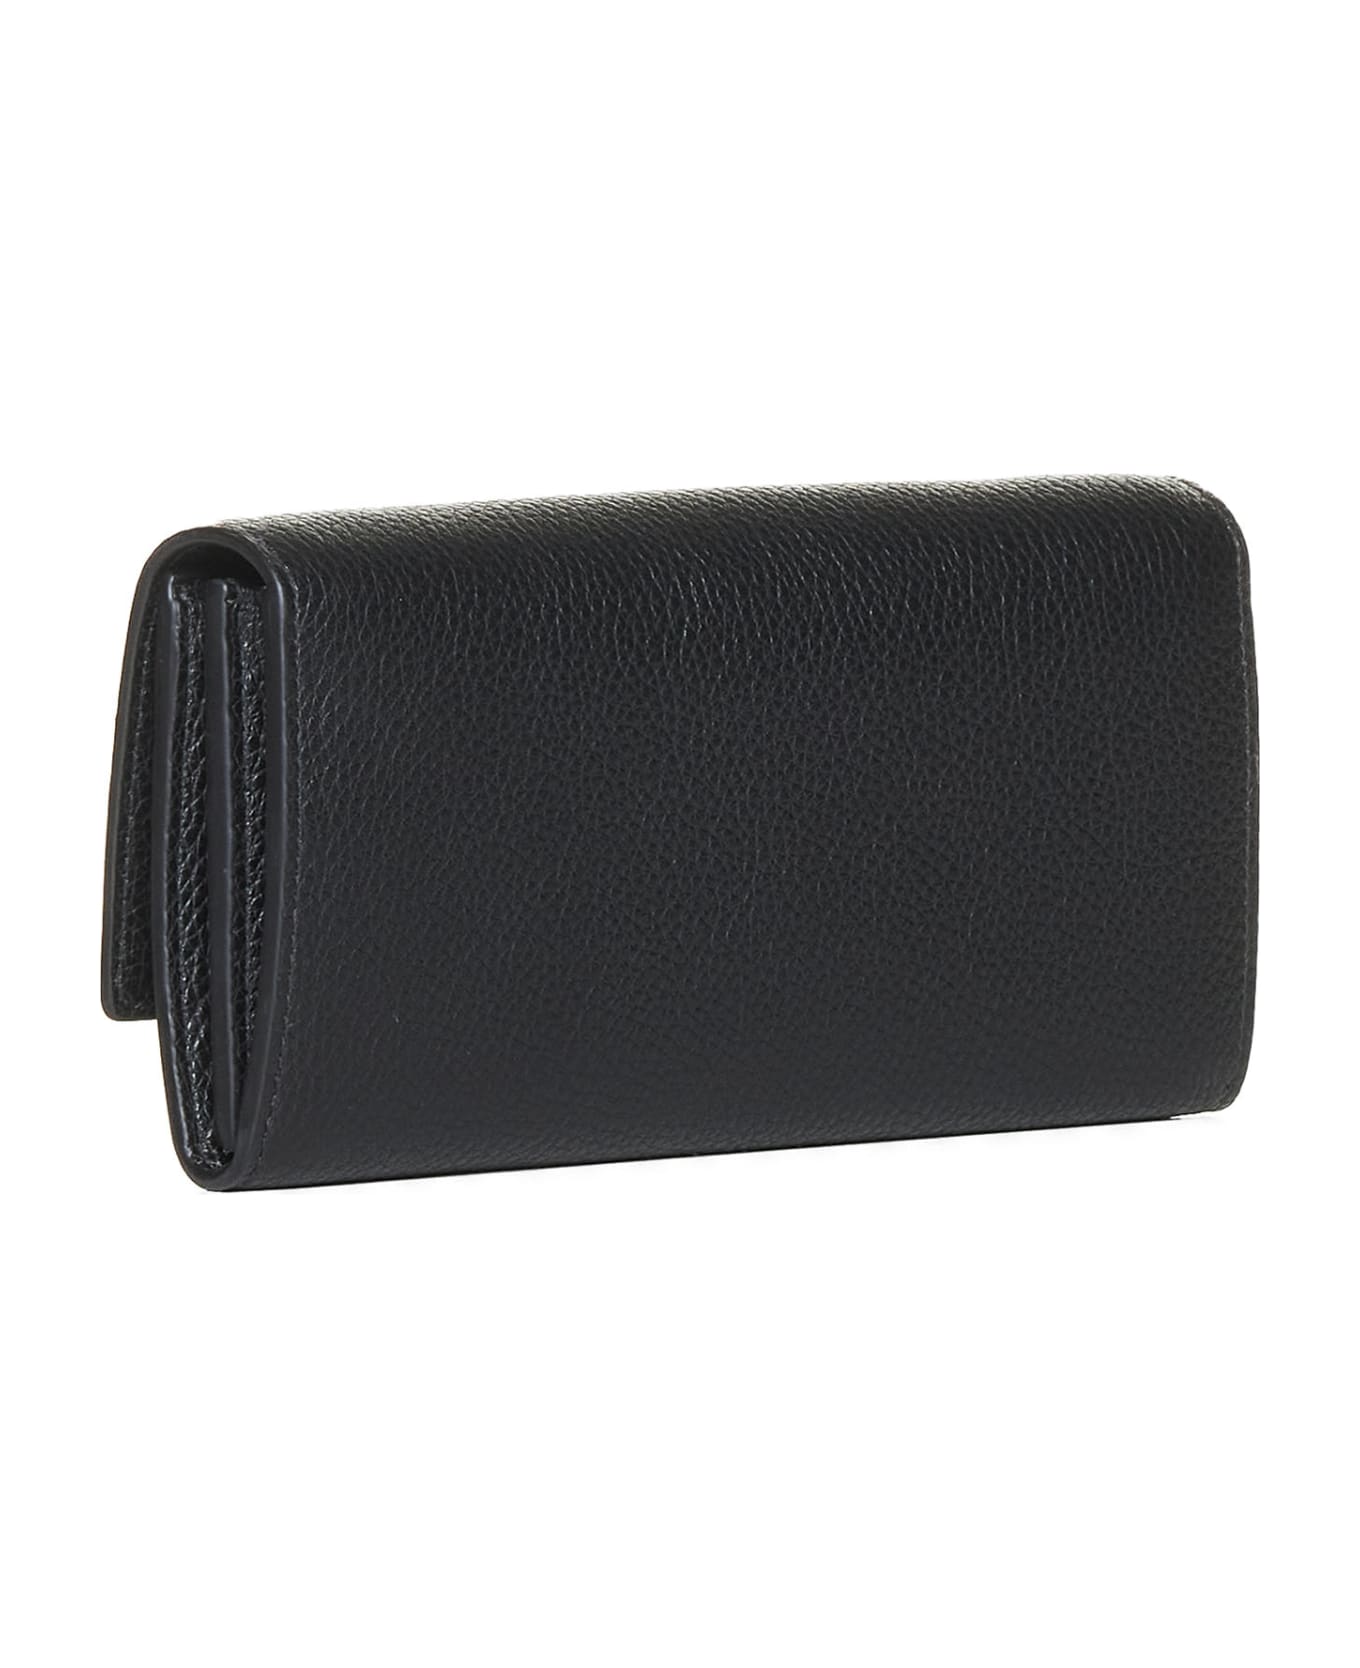 Ferragamo Gancino Soft Leather Wallet On Chain - Nero クラッチバッグ